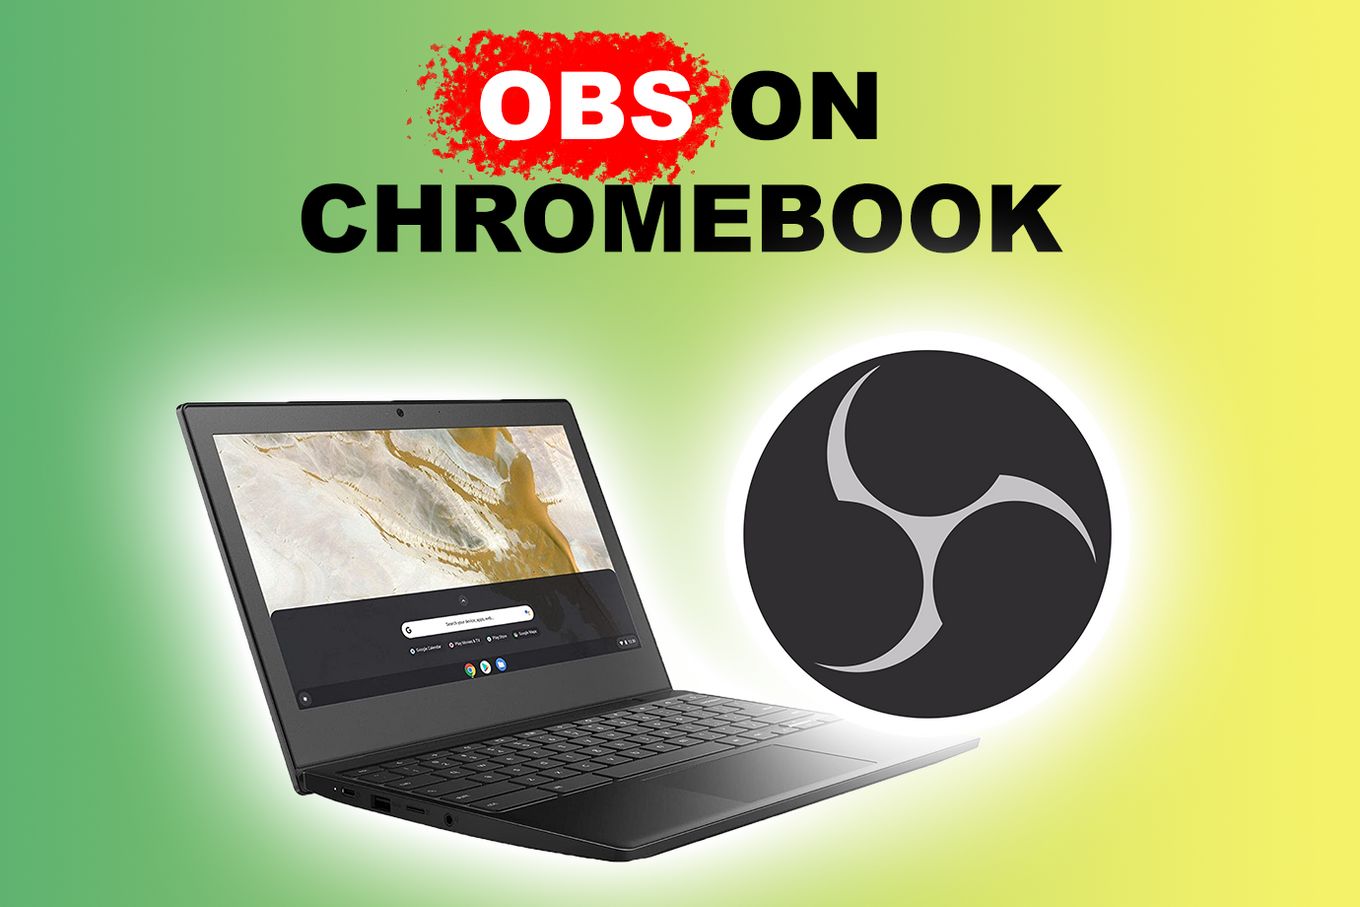 Obs on Chromebook